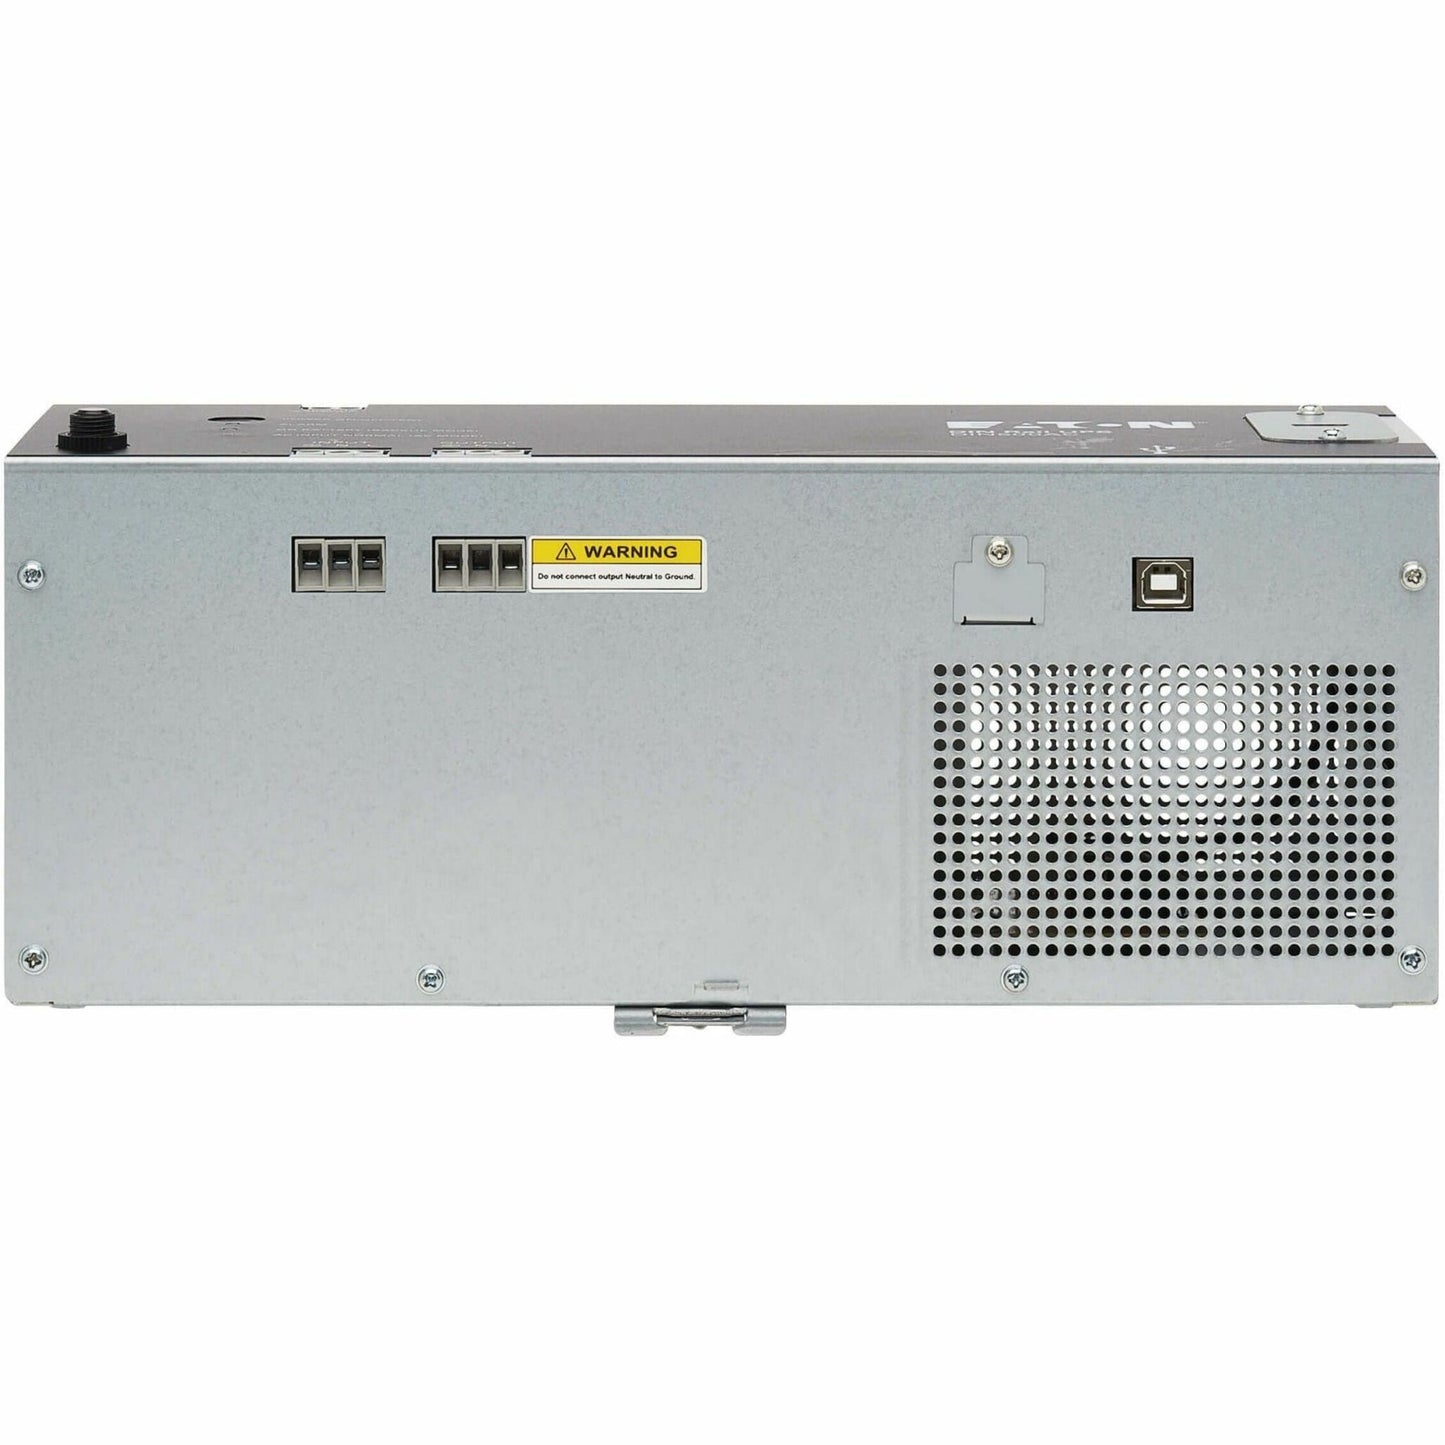 Eaton 500VA 300W 120V AC DIN Rail Industrial UPS - Hardwire Input/Output